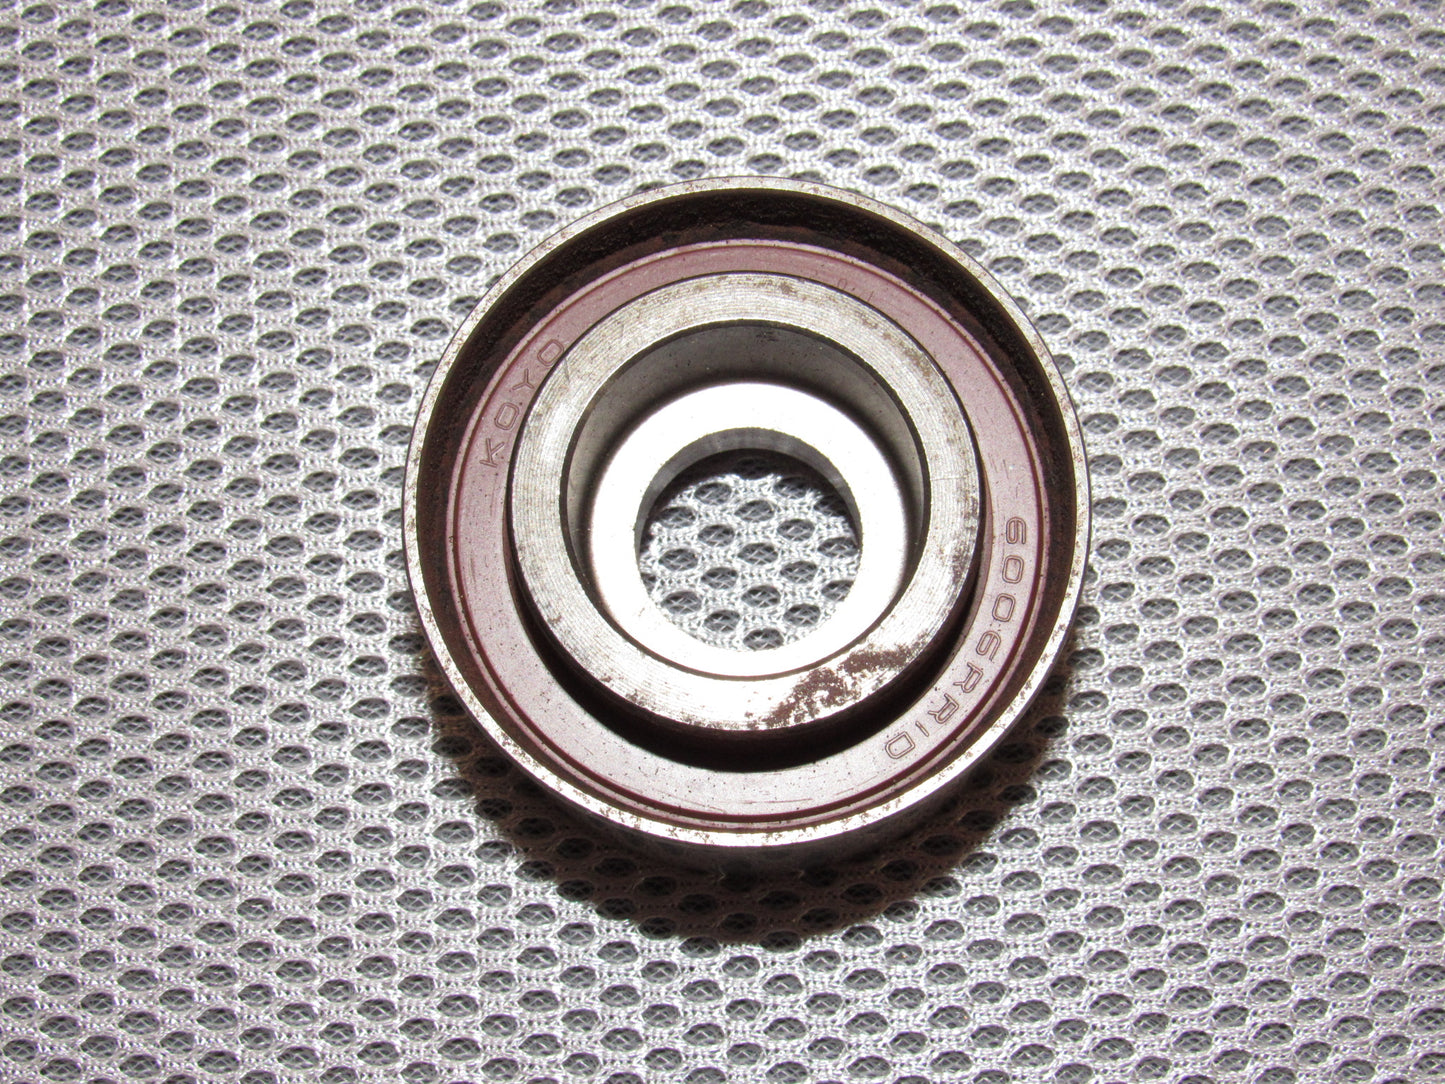 01 02 03 Acura CL OEM Engine Timing Belt Idler Pulley